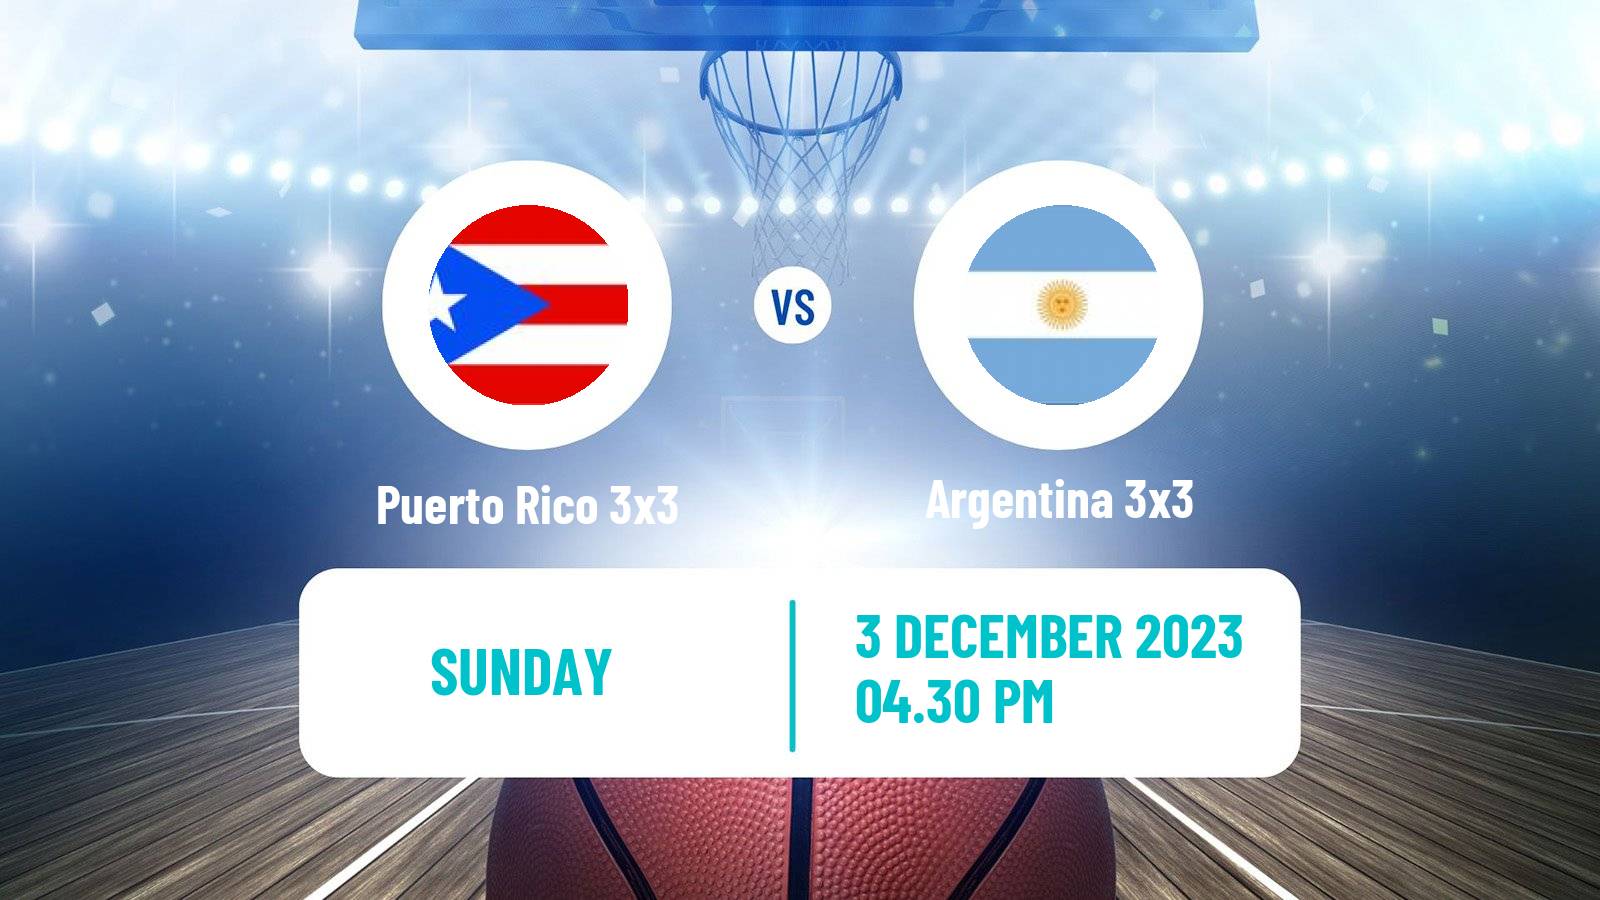 Basketball Americup 3x3 Puerto Rico 3x3 - Argentina 3x3